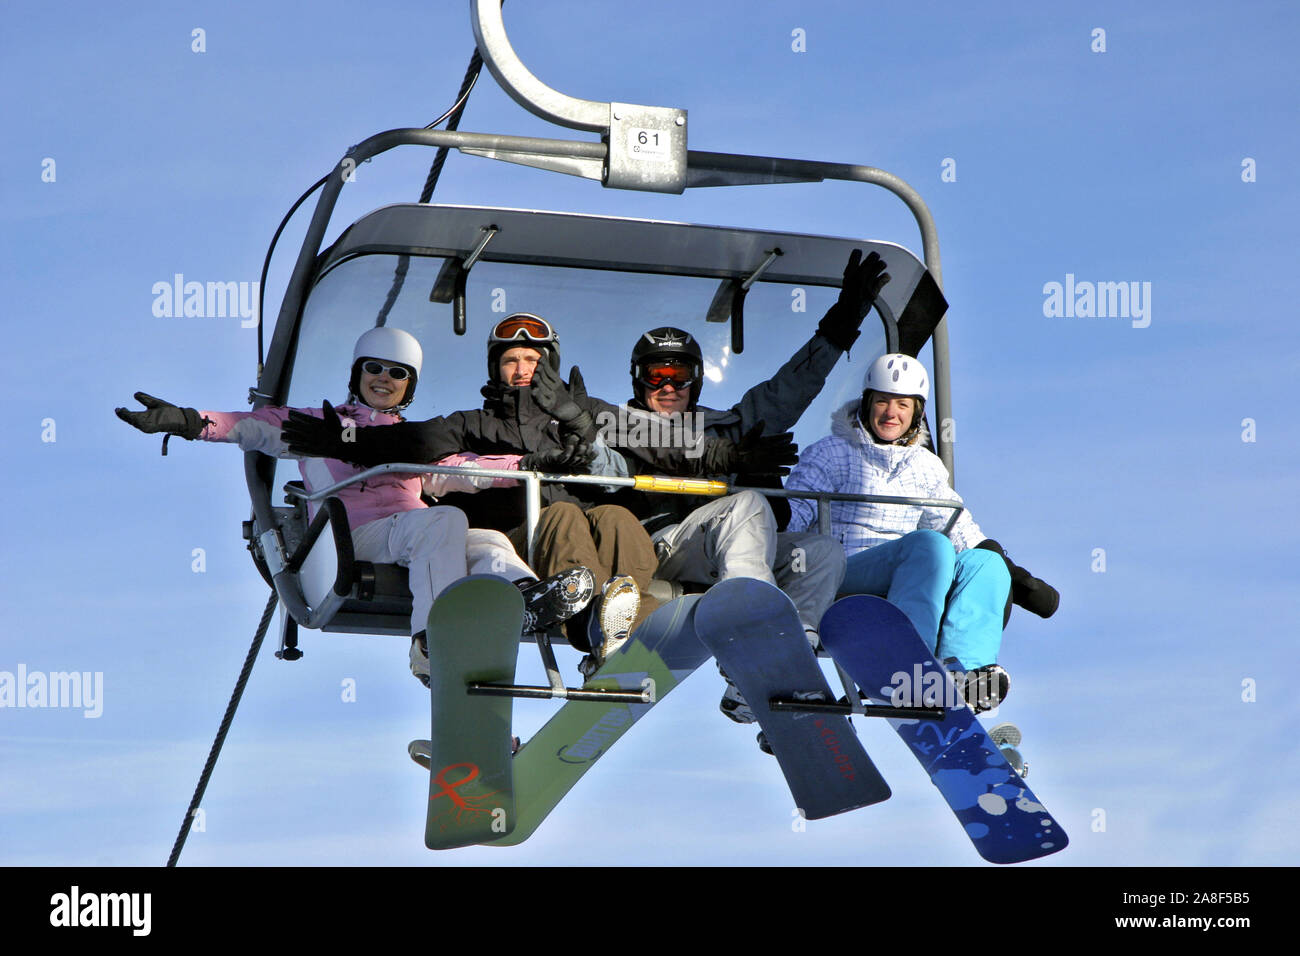 Am Skilift, Sessellift mit 4 Personen, signor: n. Foto Stock